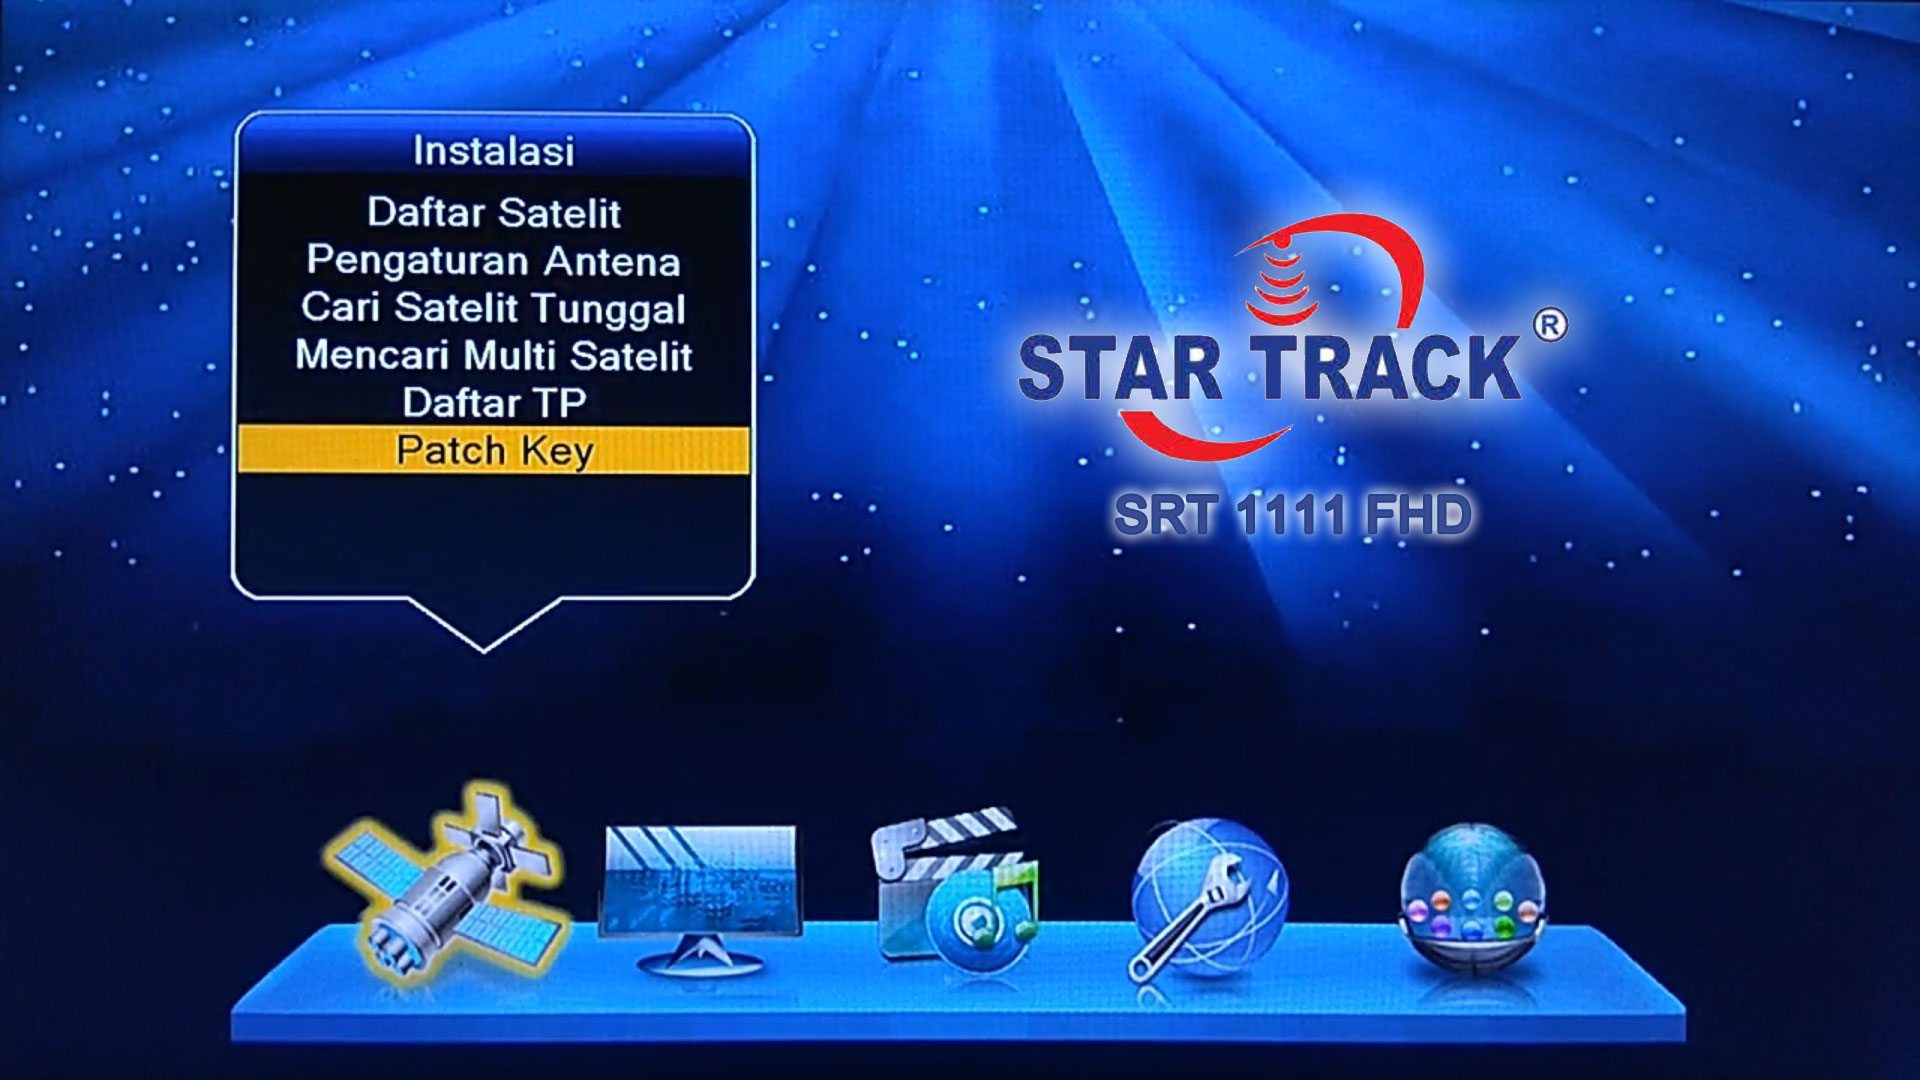 Download Software Star Track SRT 1111 FHD Update Firmware Receiver